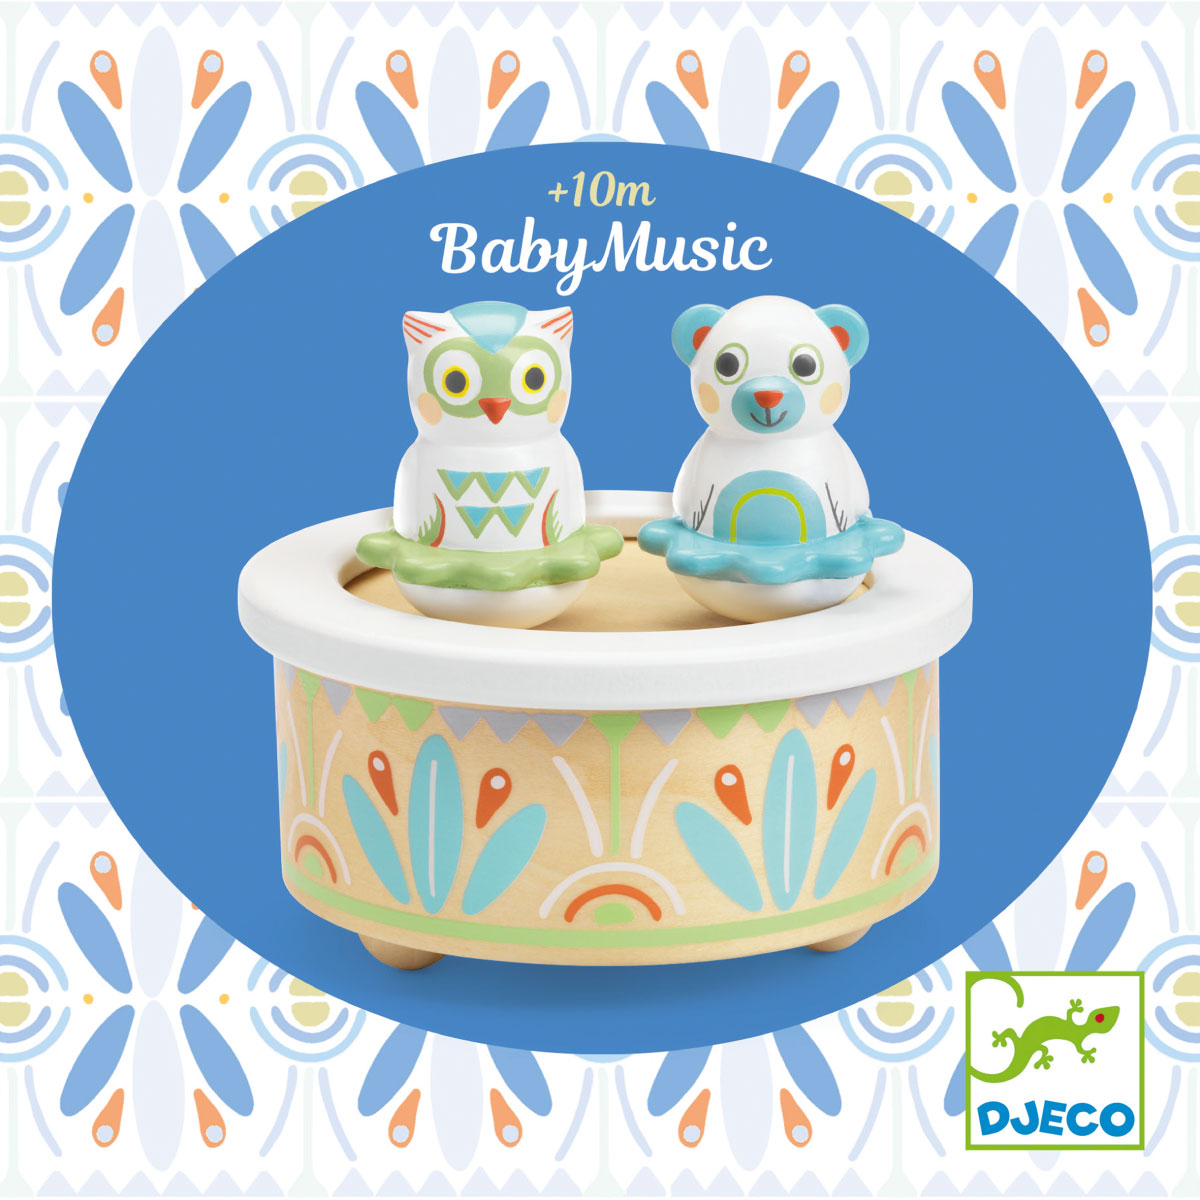 Baby Music Box from Djeco